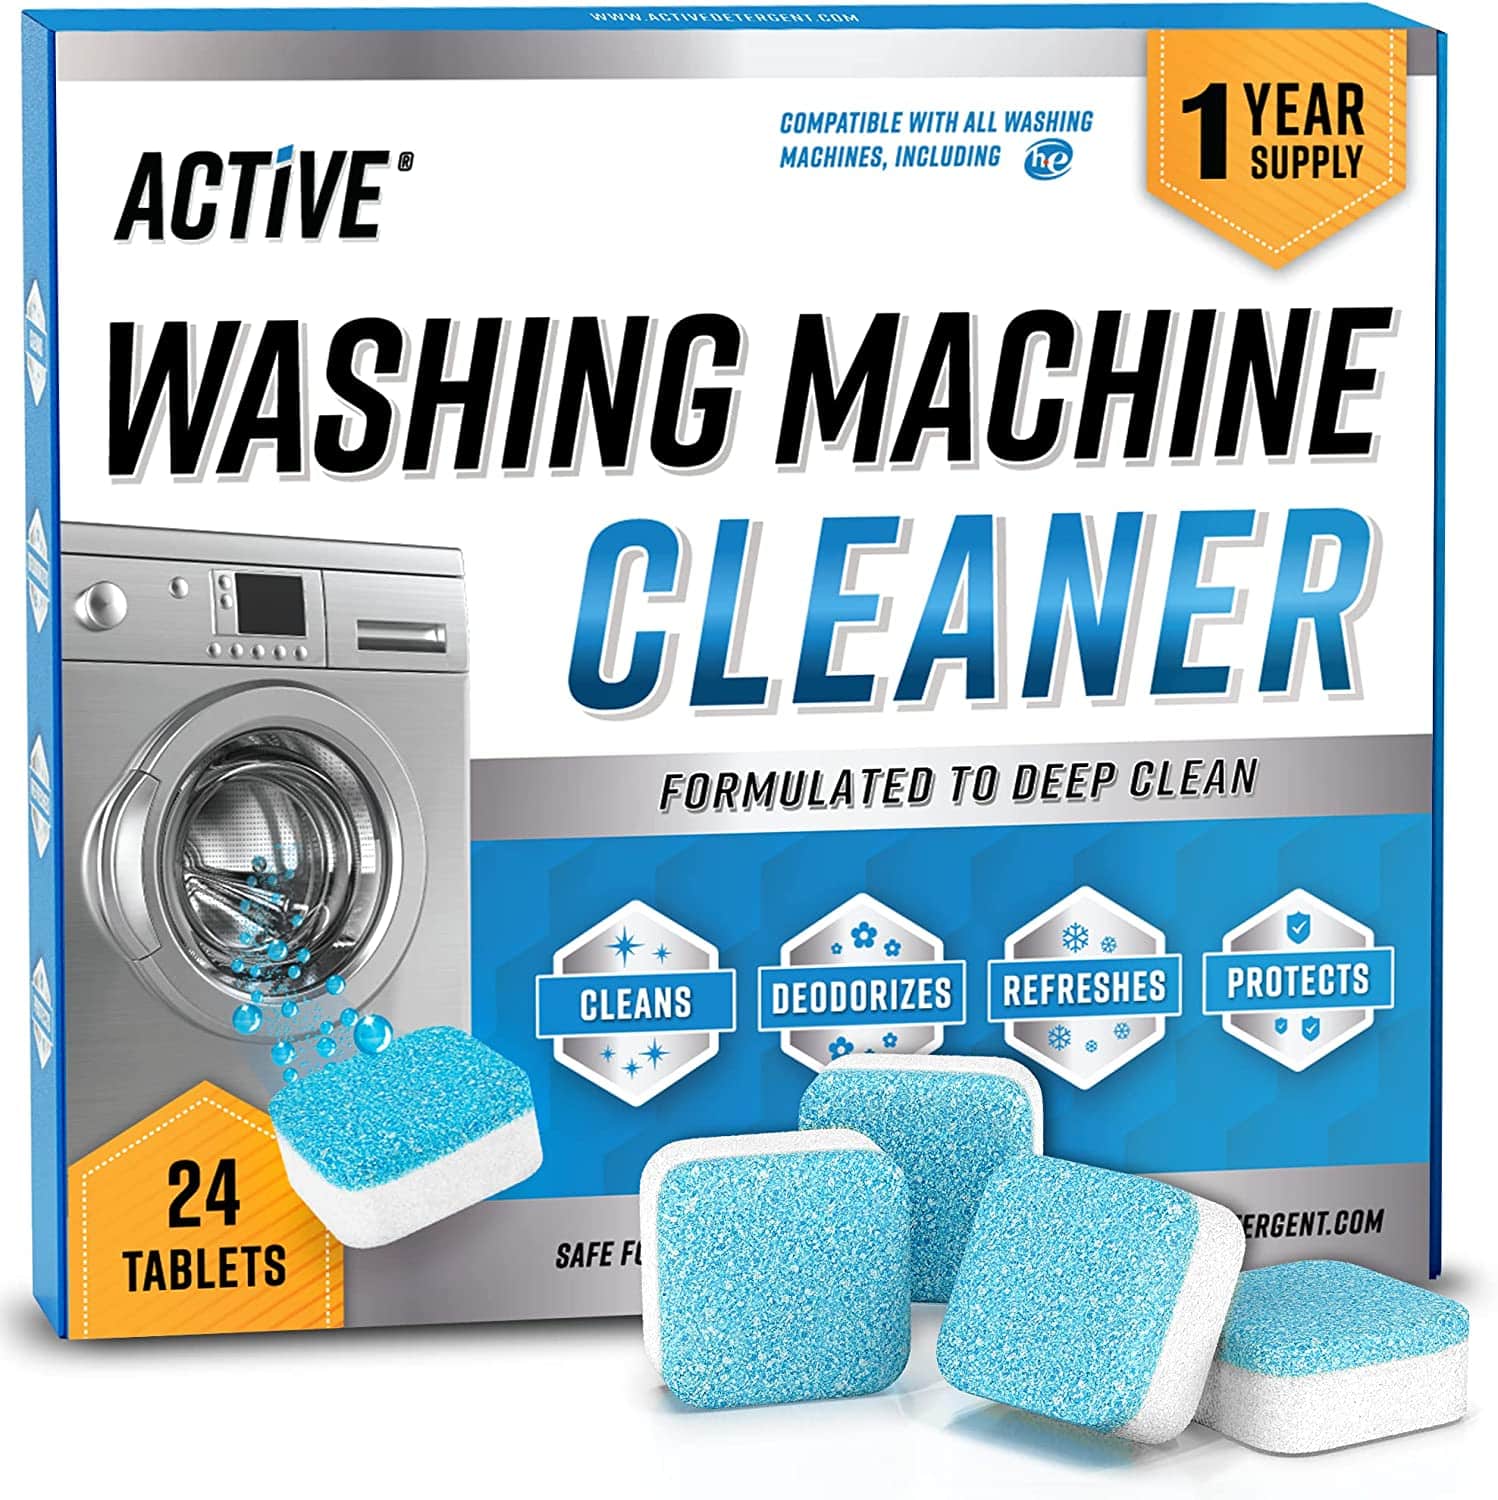 Active Washing Machine Cleaner Logo